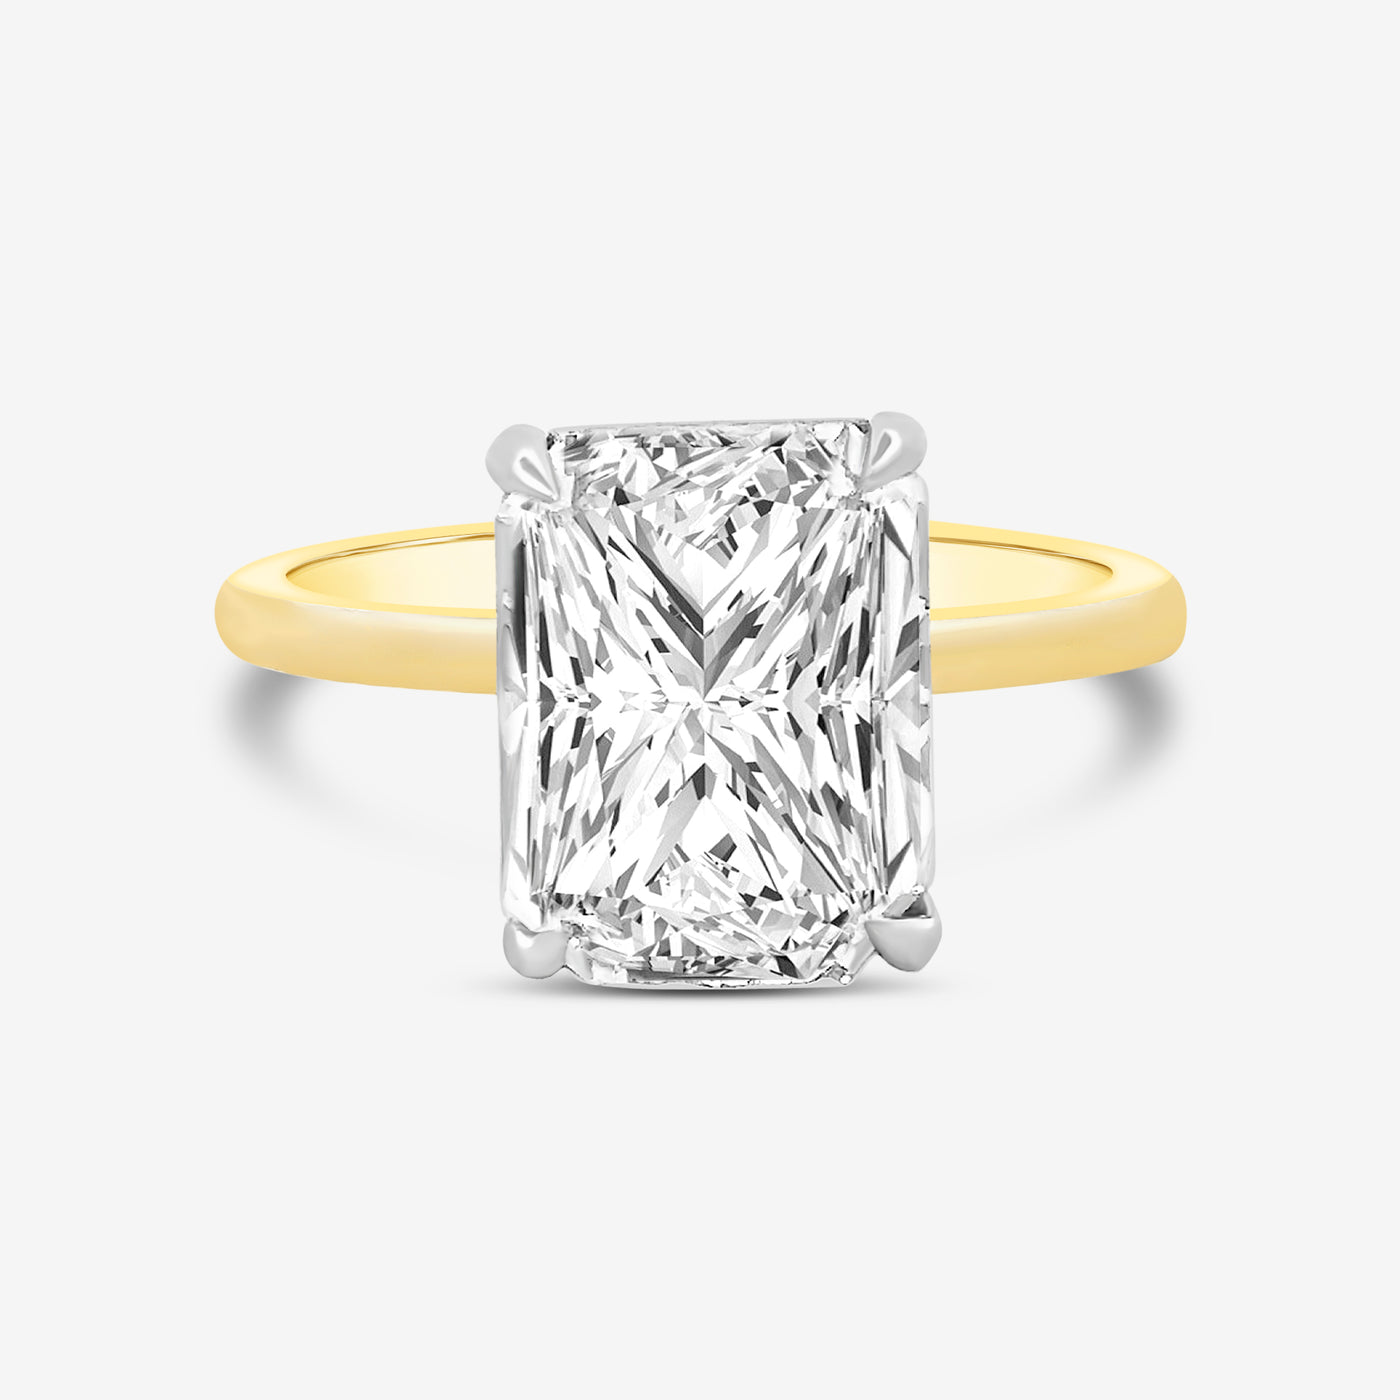 4.3 carat radiant cut diamond engagement ring